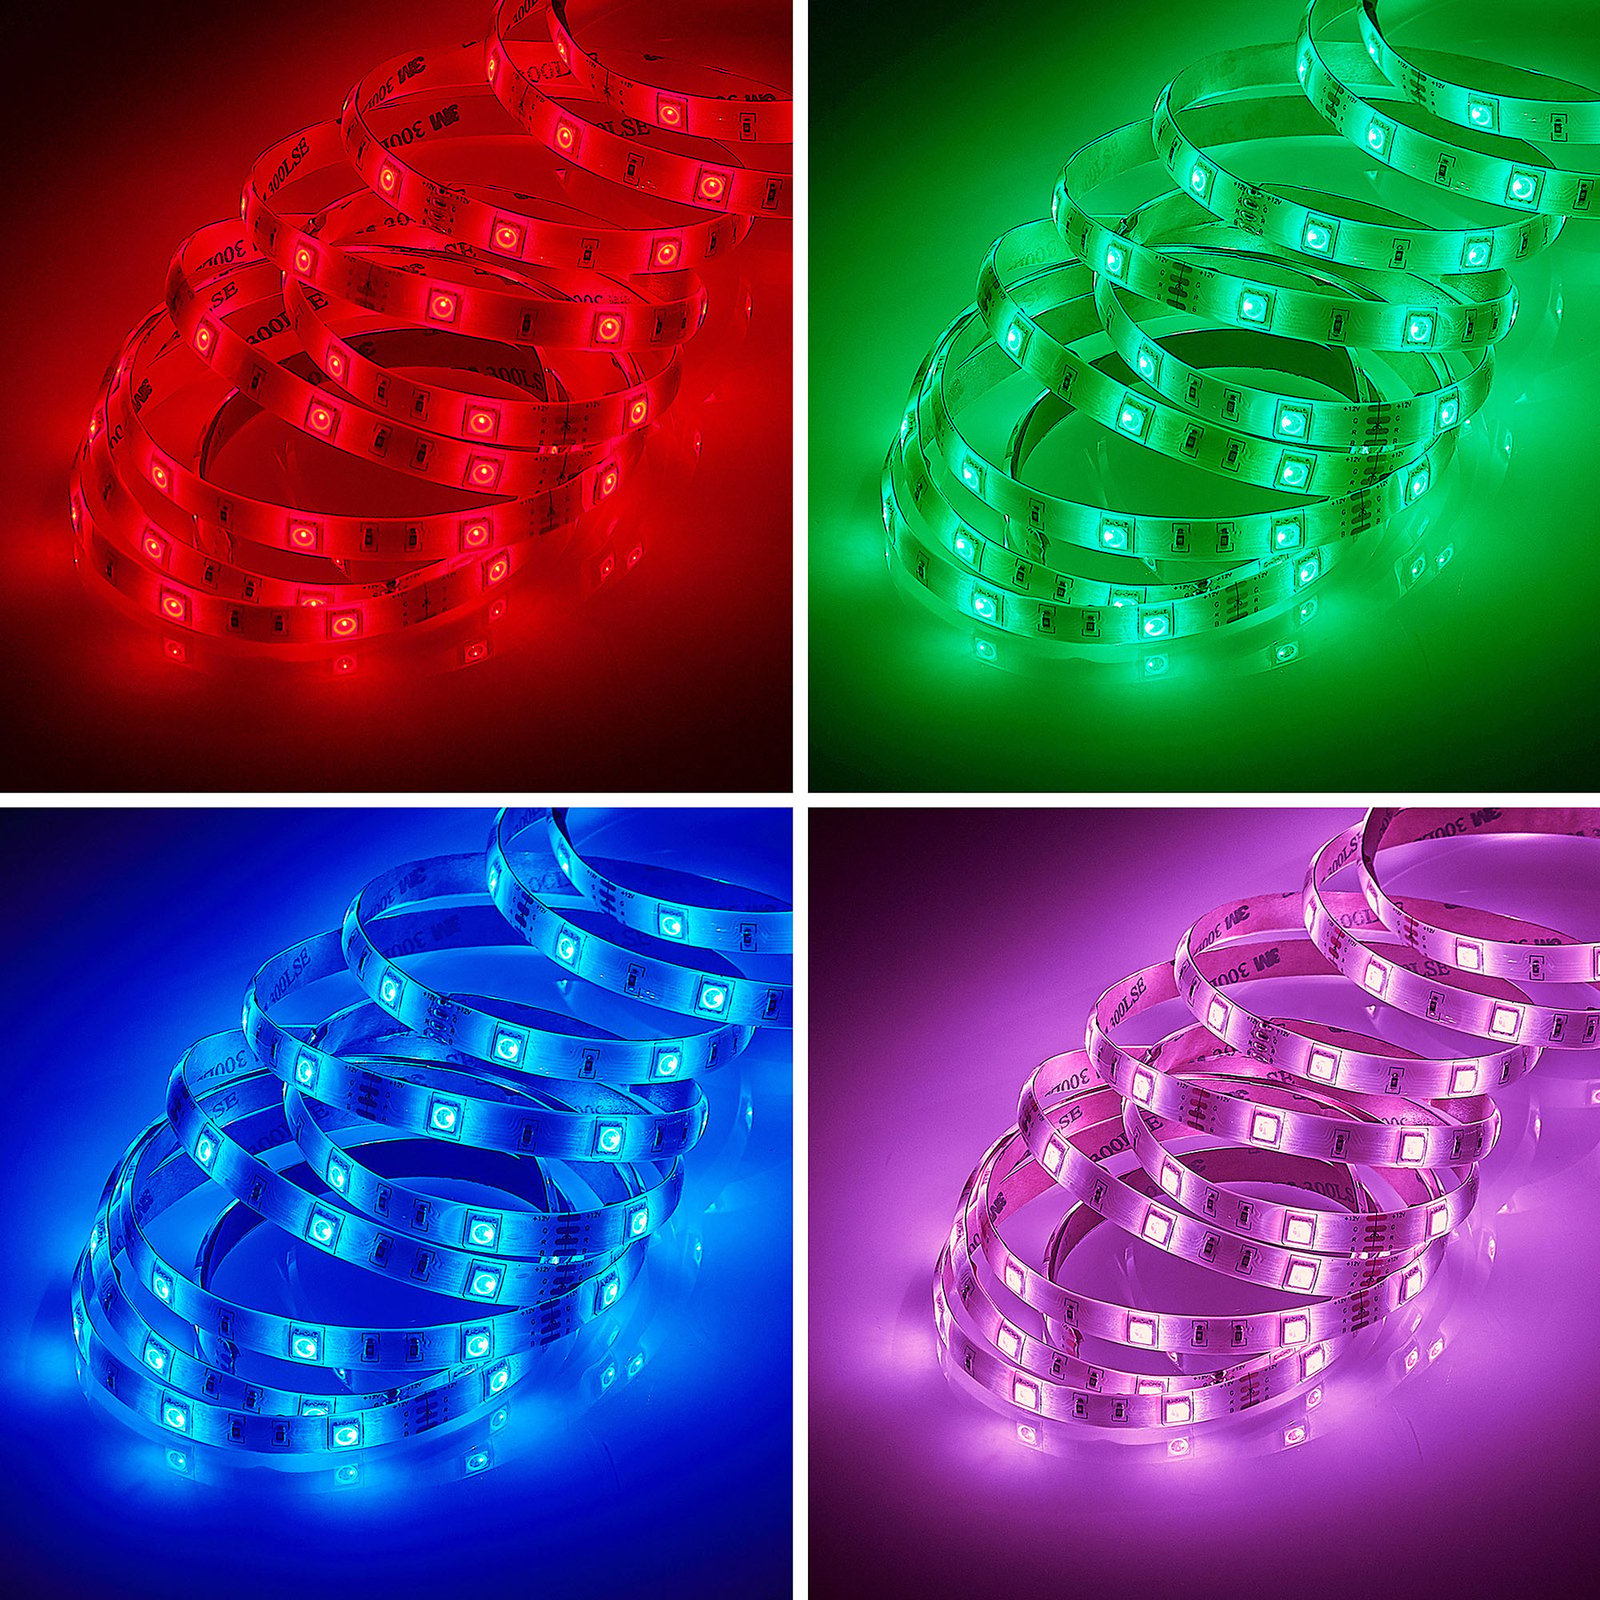 Prios Mekhi LED pásek, RGB, 5m